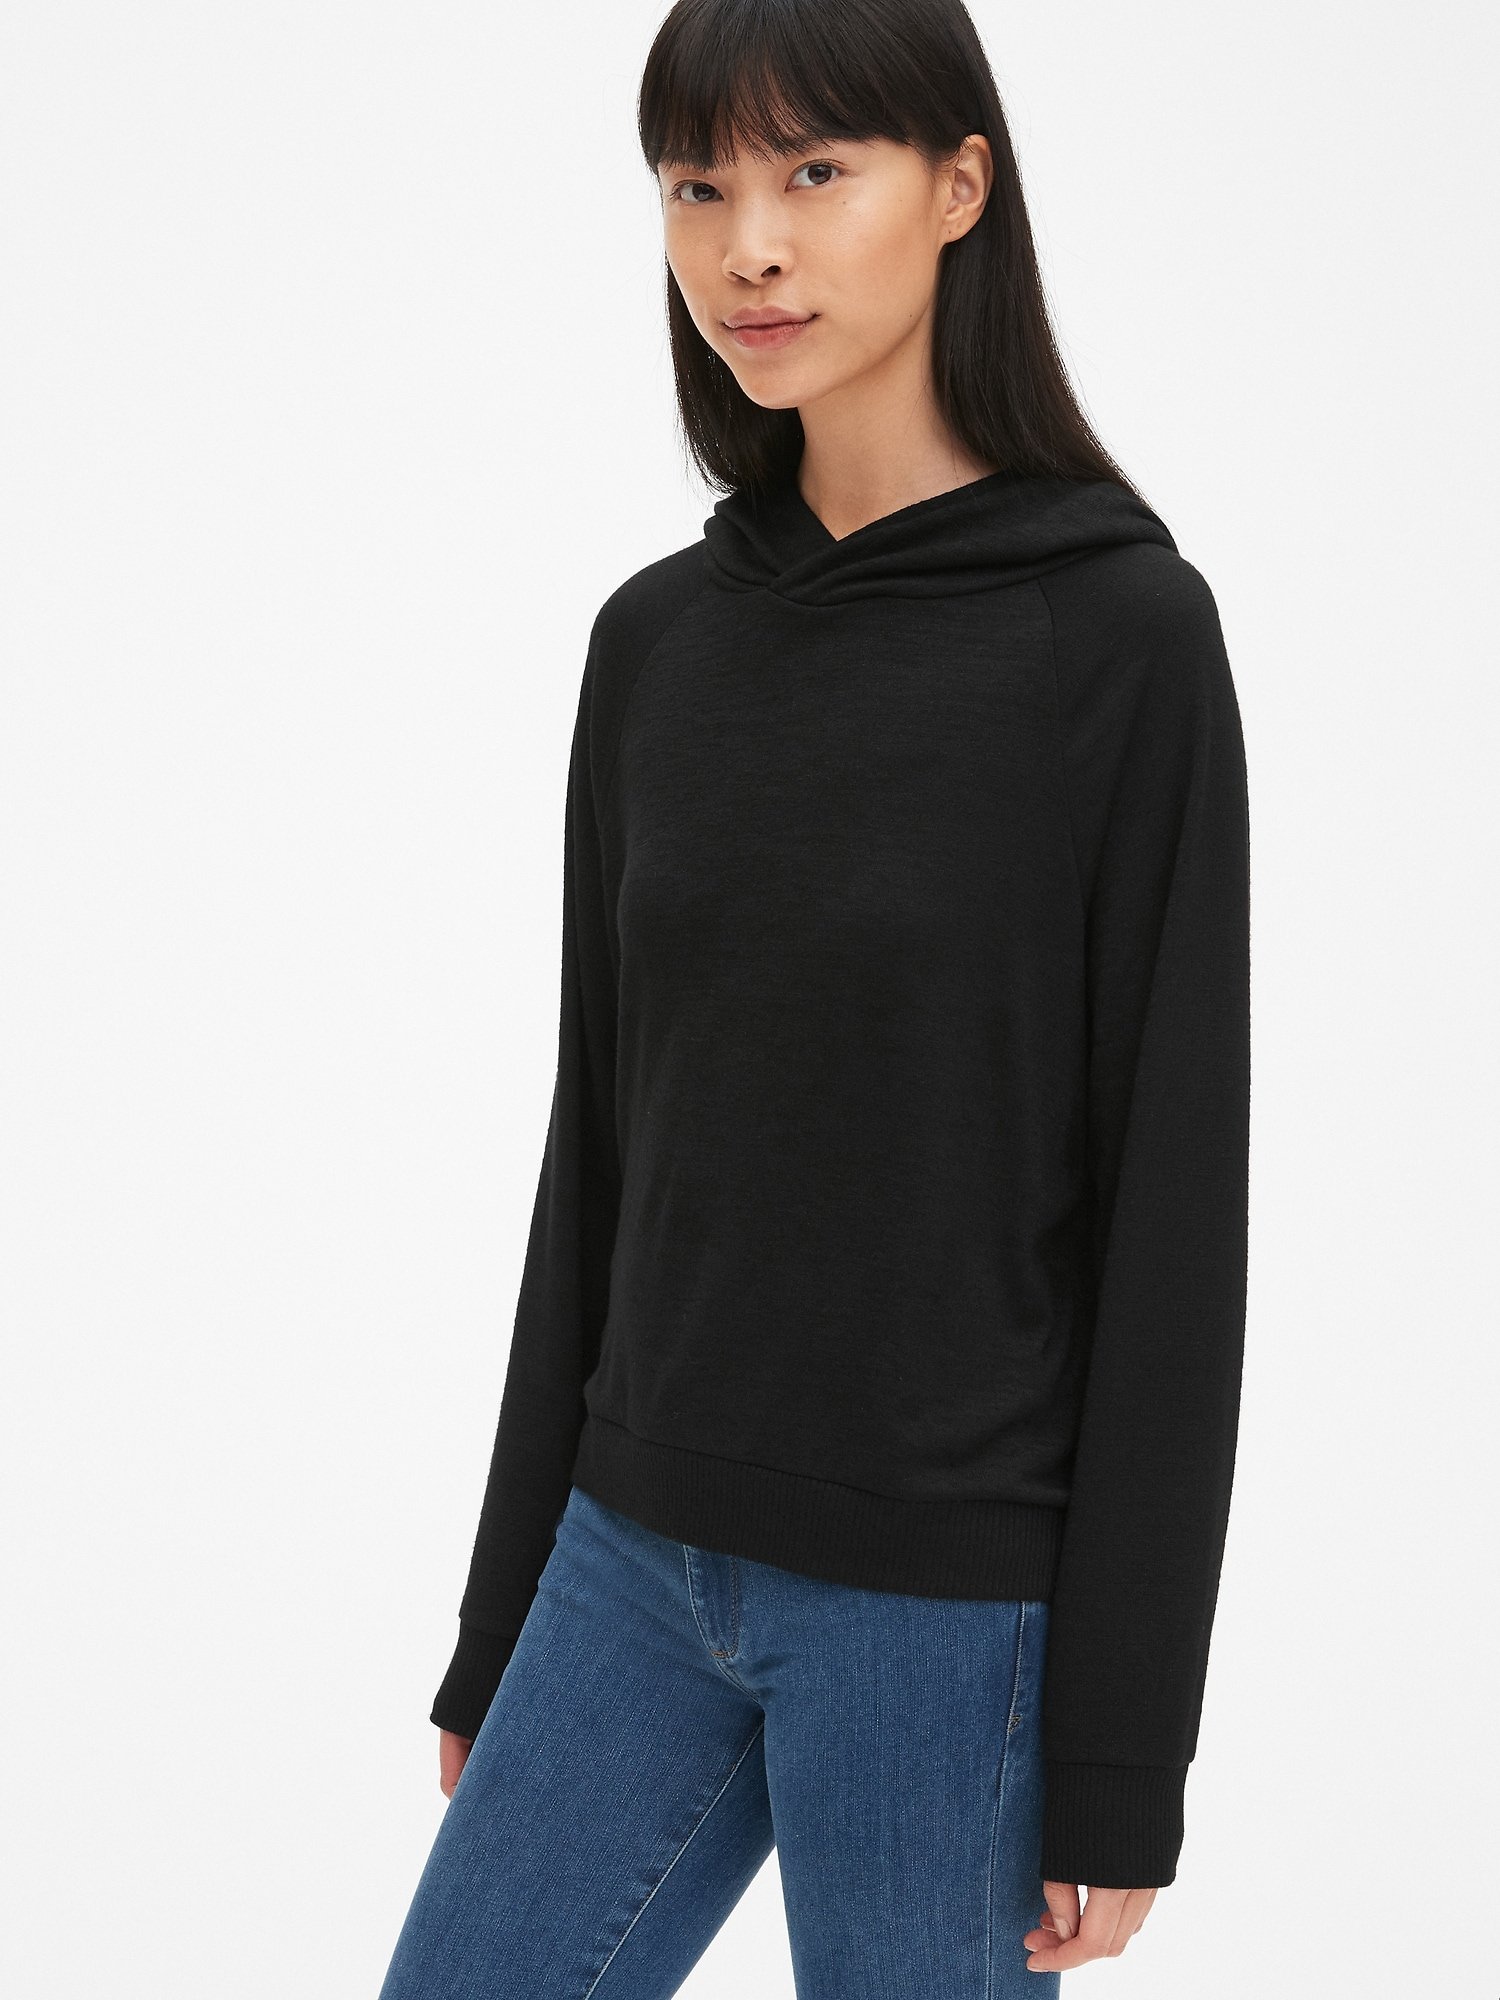 Softspun Sweatshirt product image